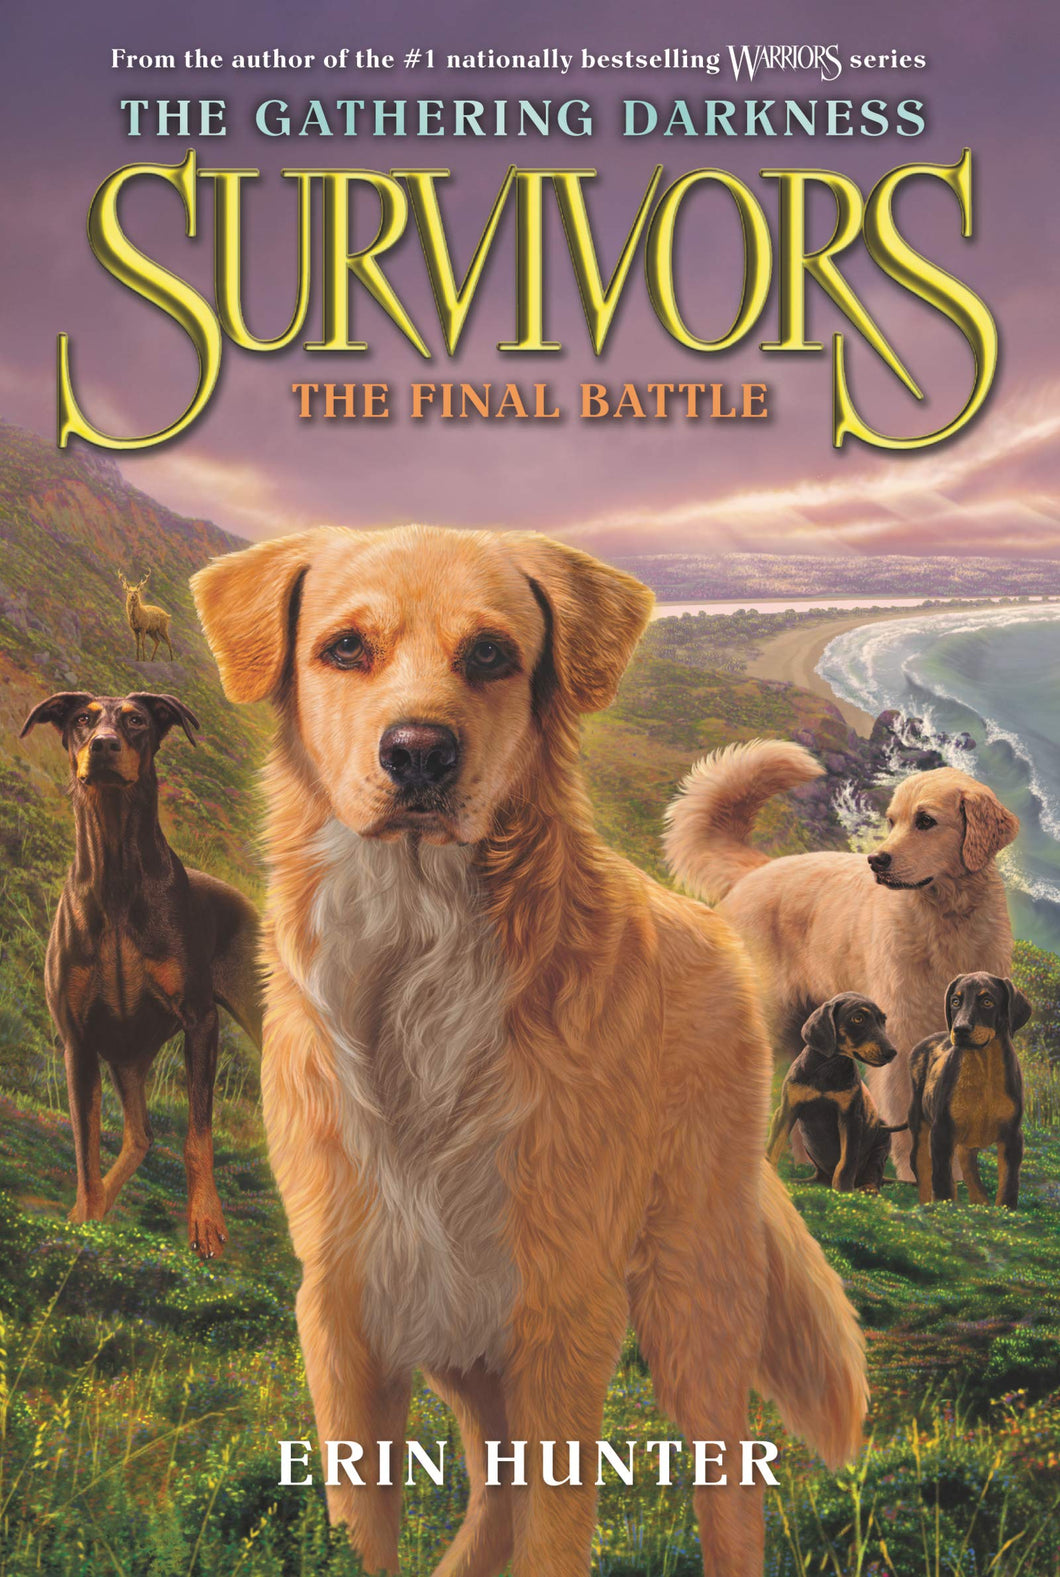 Survivors: The Gathering Darkness #6: The Final Battle